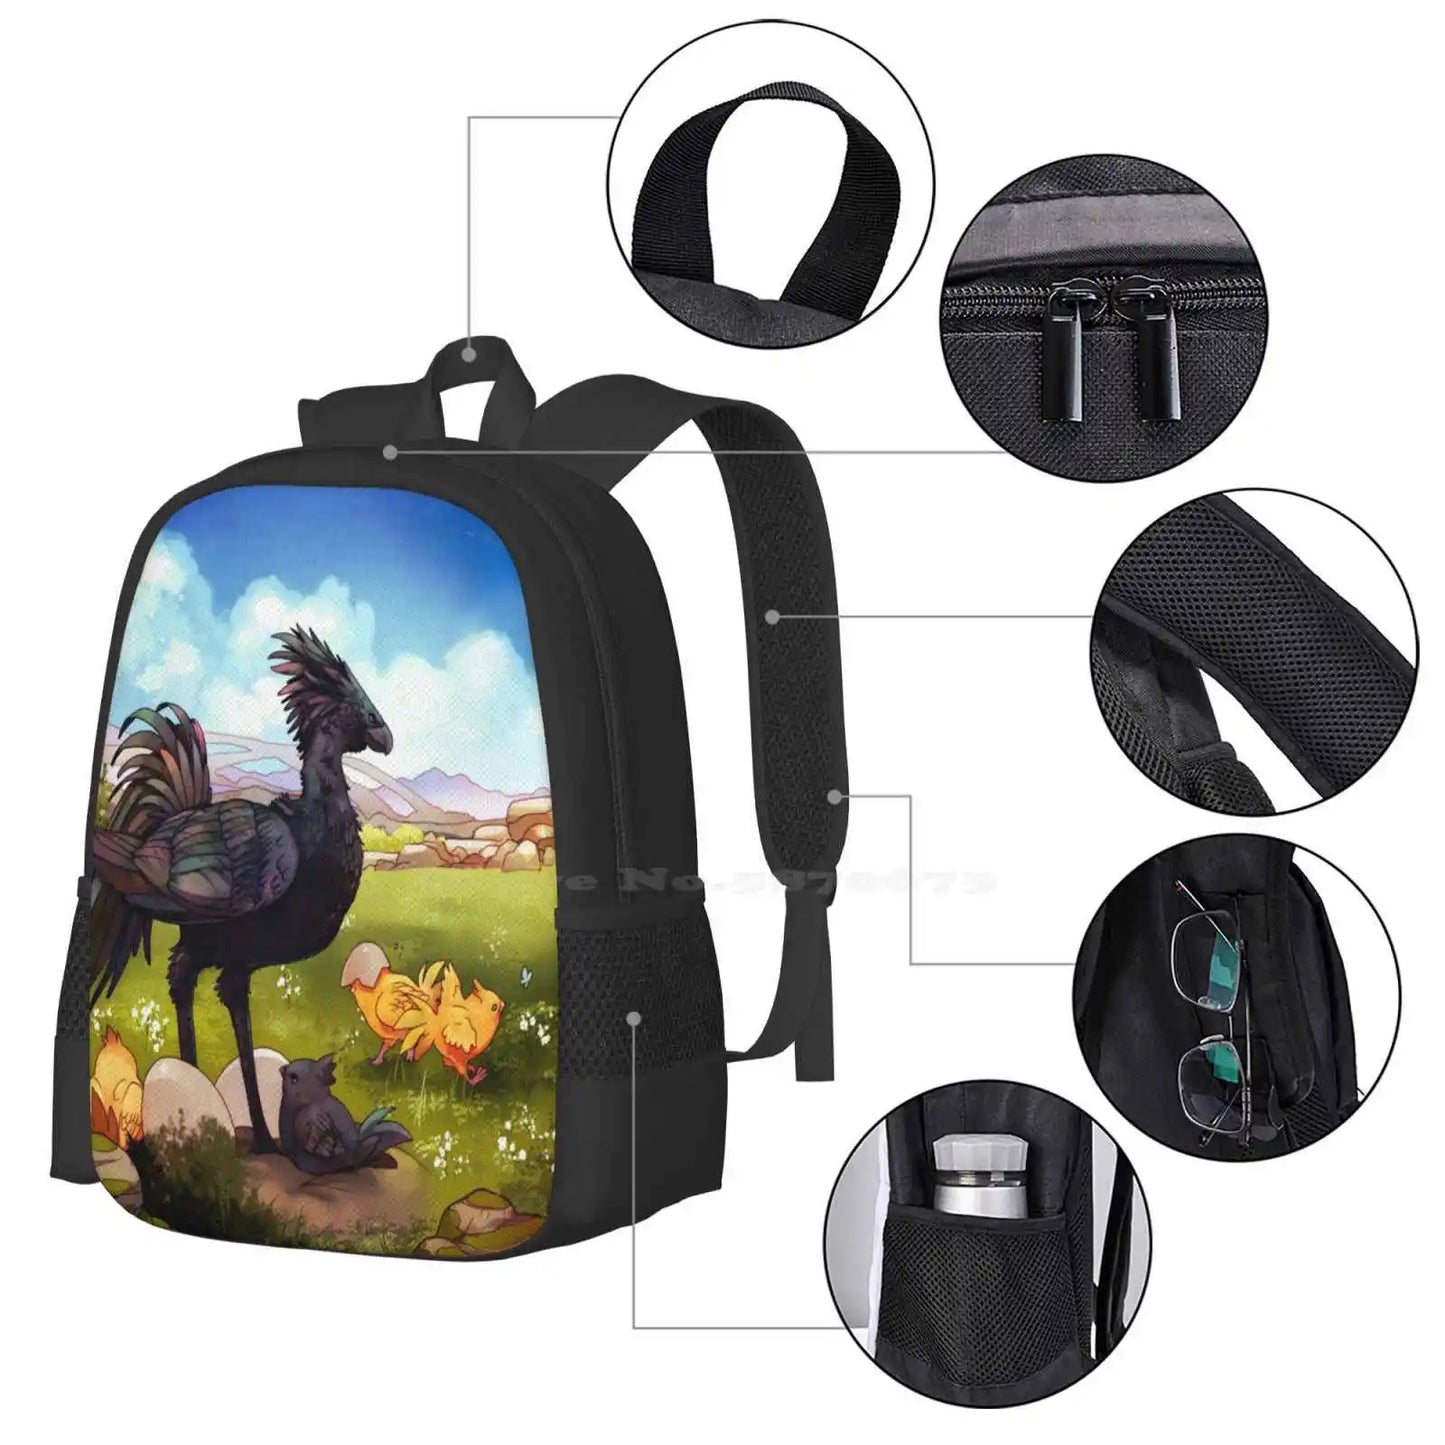 Chocobos Backpack For Student School Laptop Travel Bag Ffxv Landscape Final Fantasy 15 Black Chocobo Chocochick